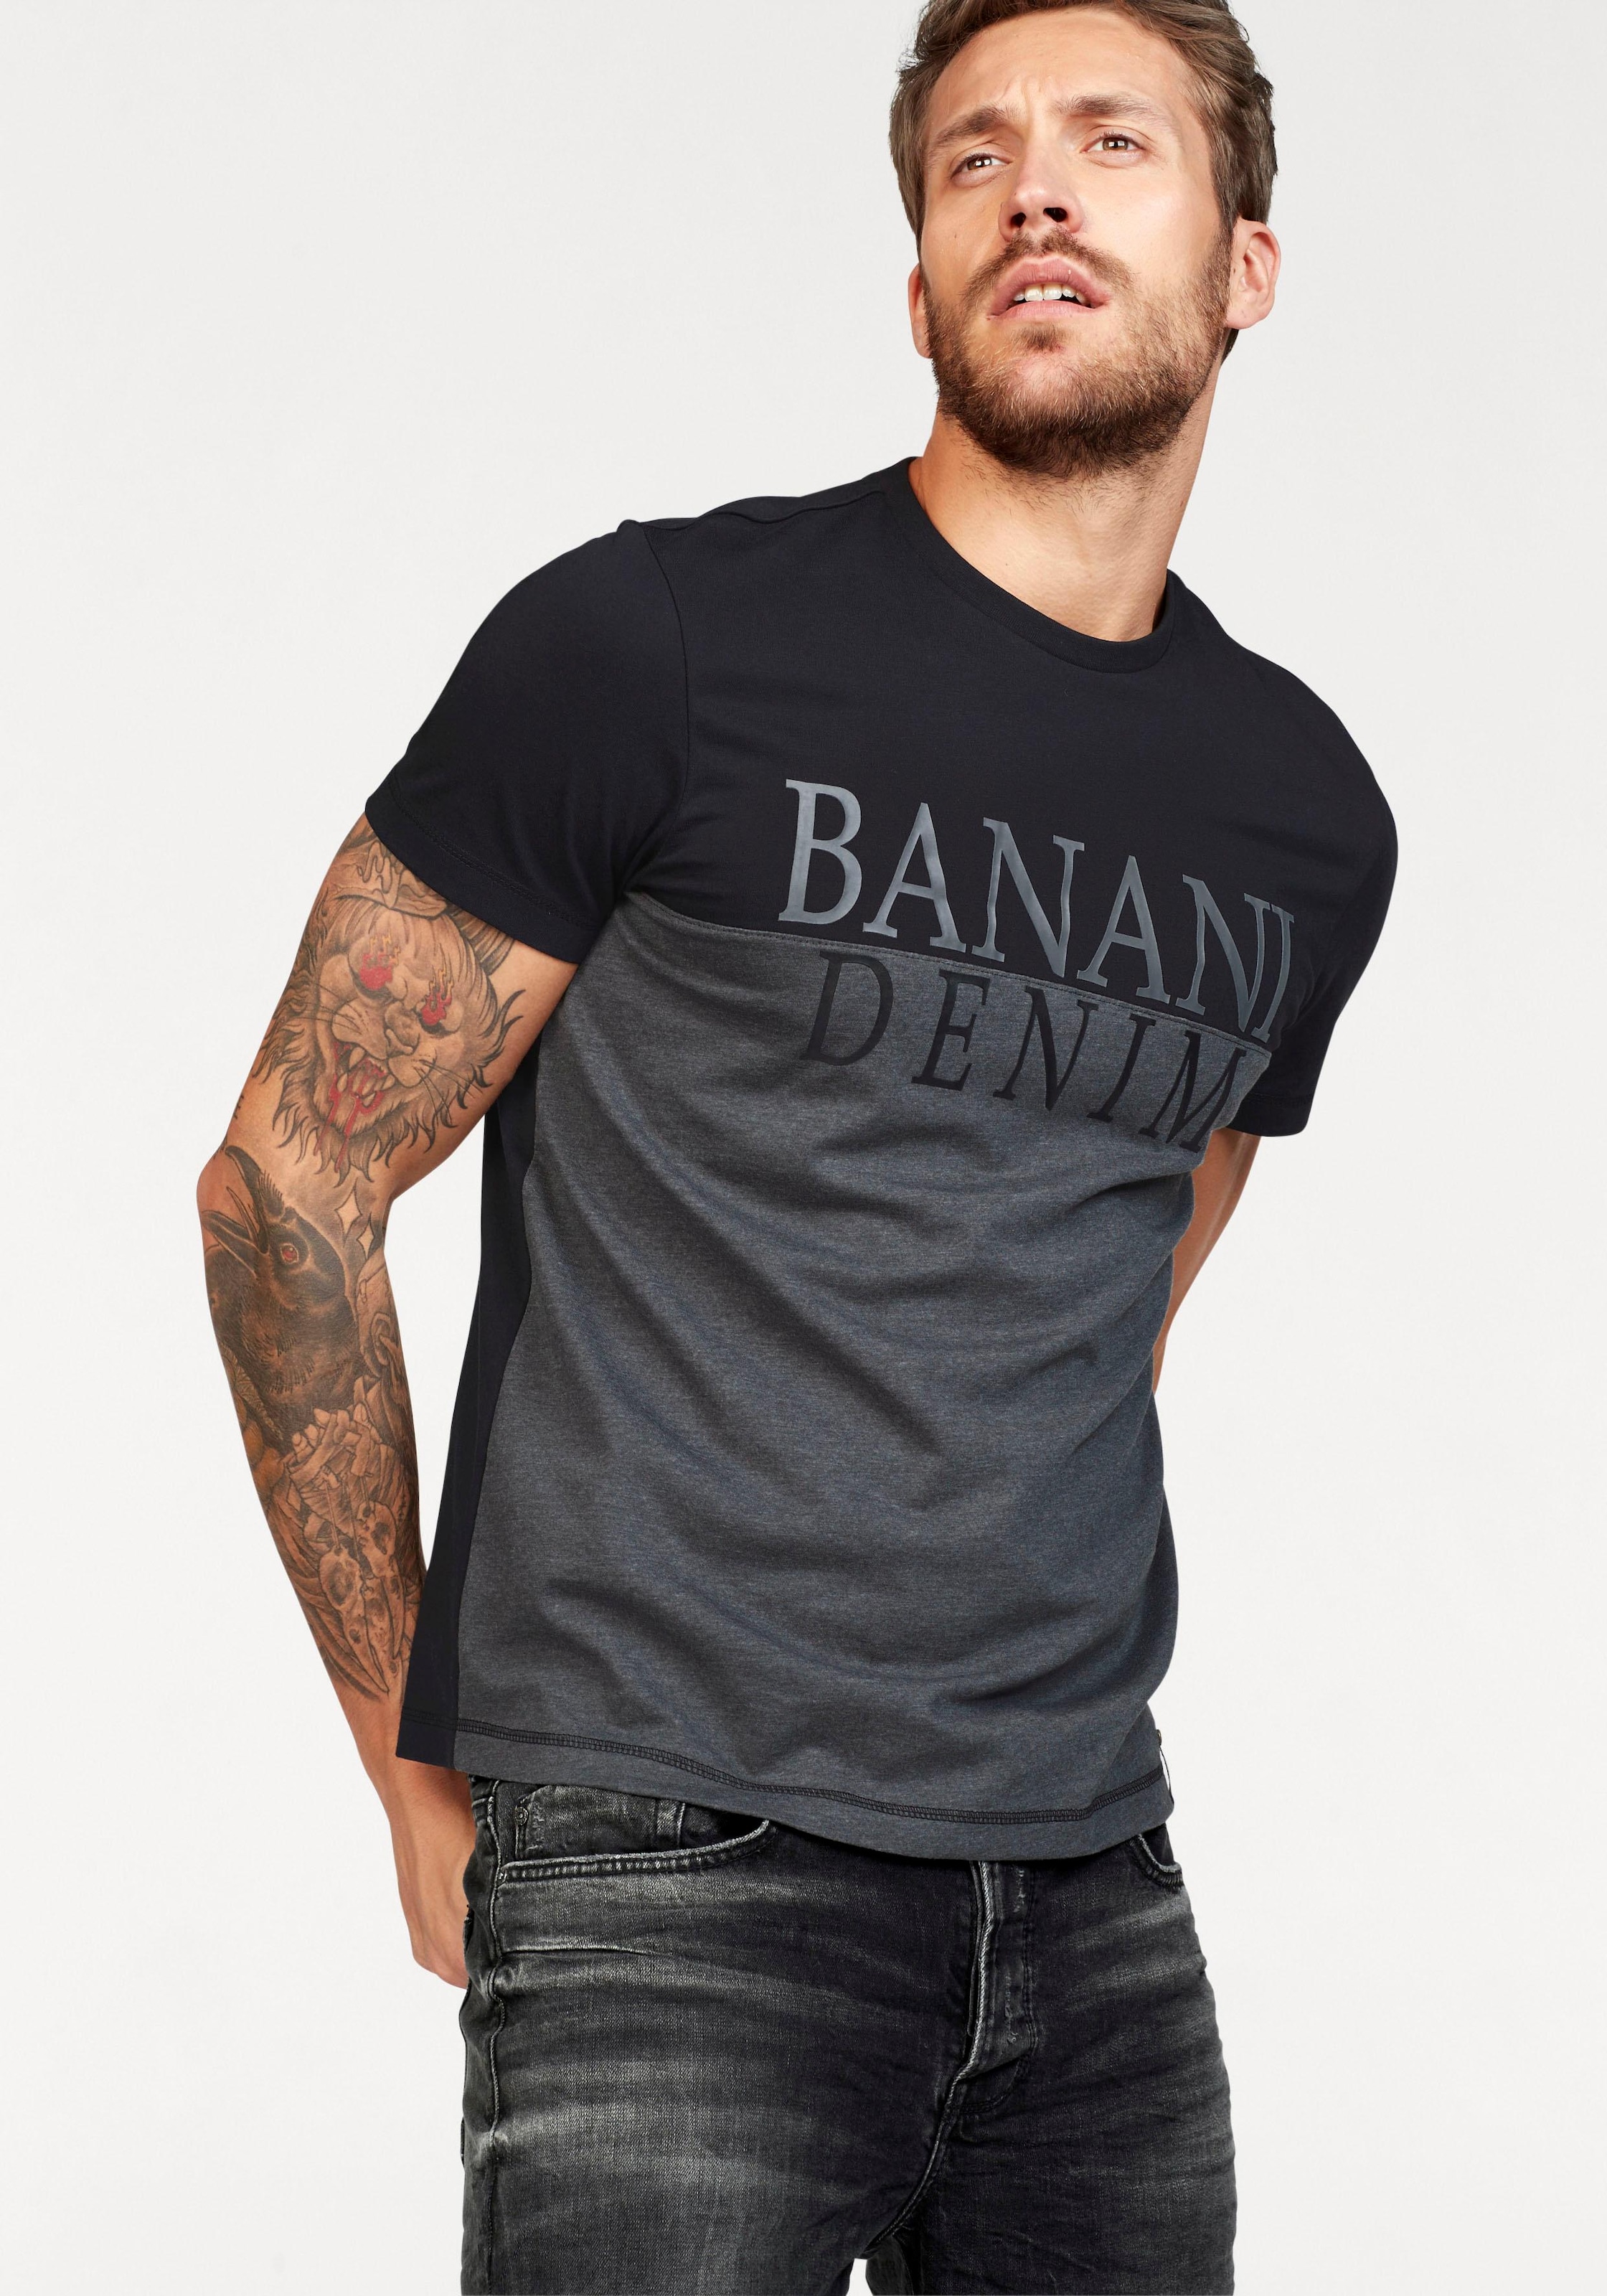 Bruno Banani T-Shirt OTTO shoppen bei online